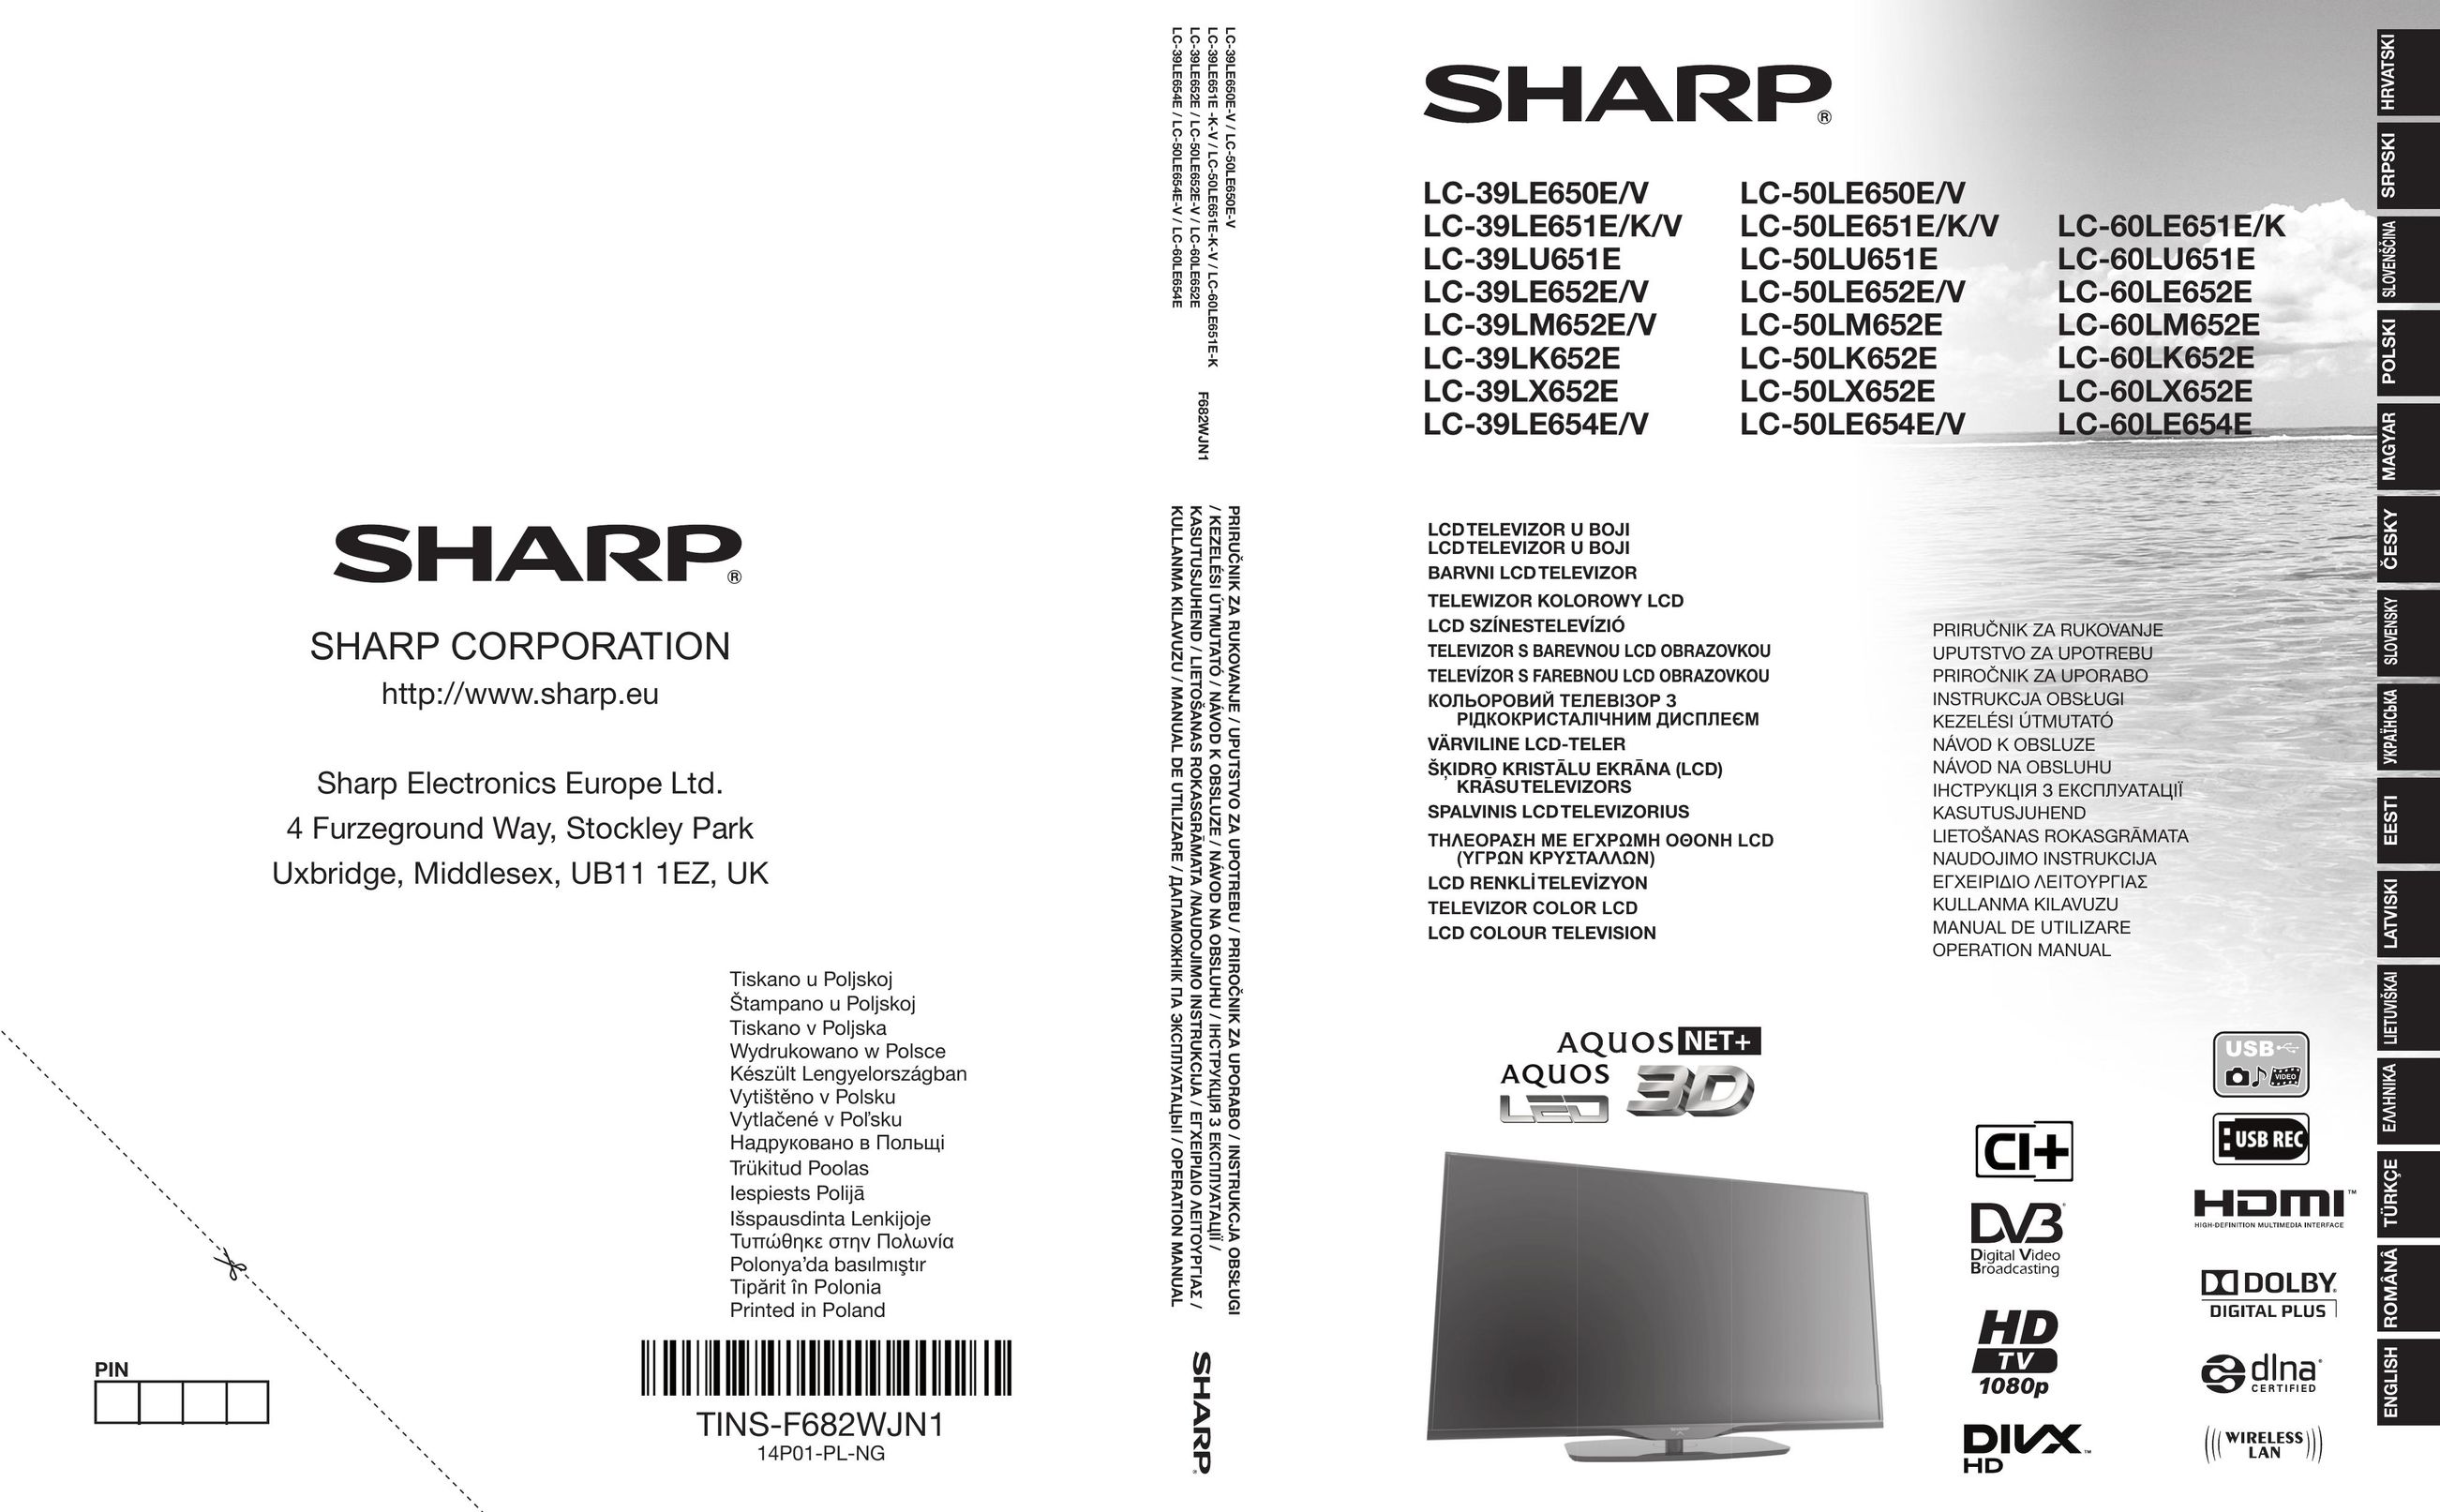 Sharp LC-60LE652E Car Video System User Manual